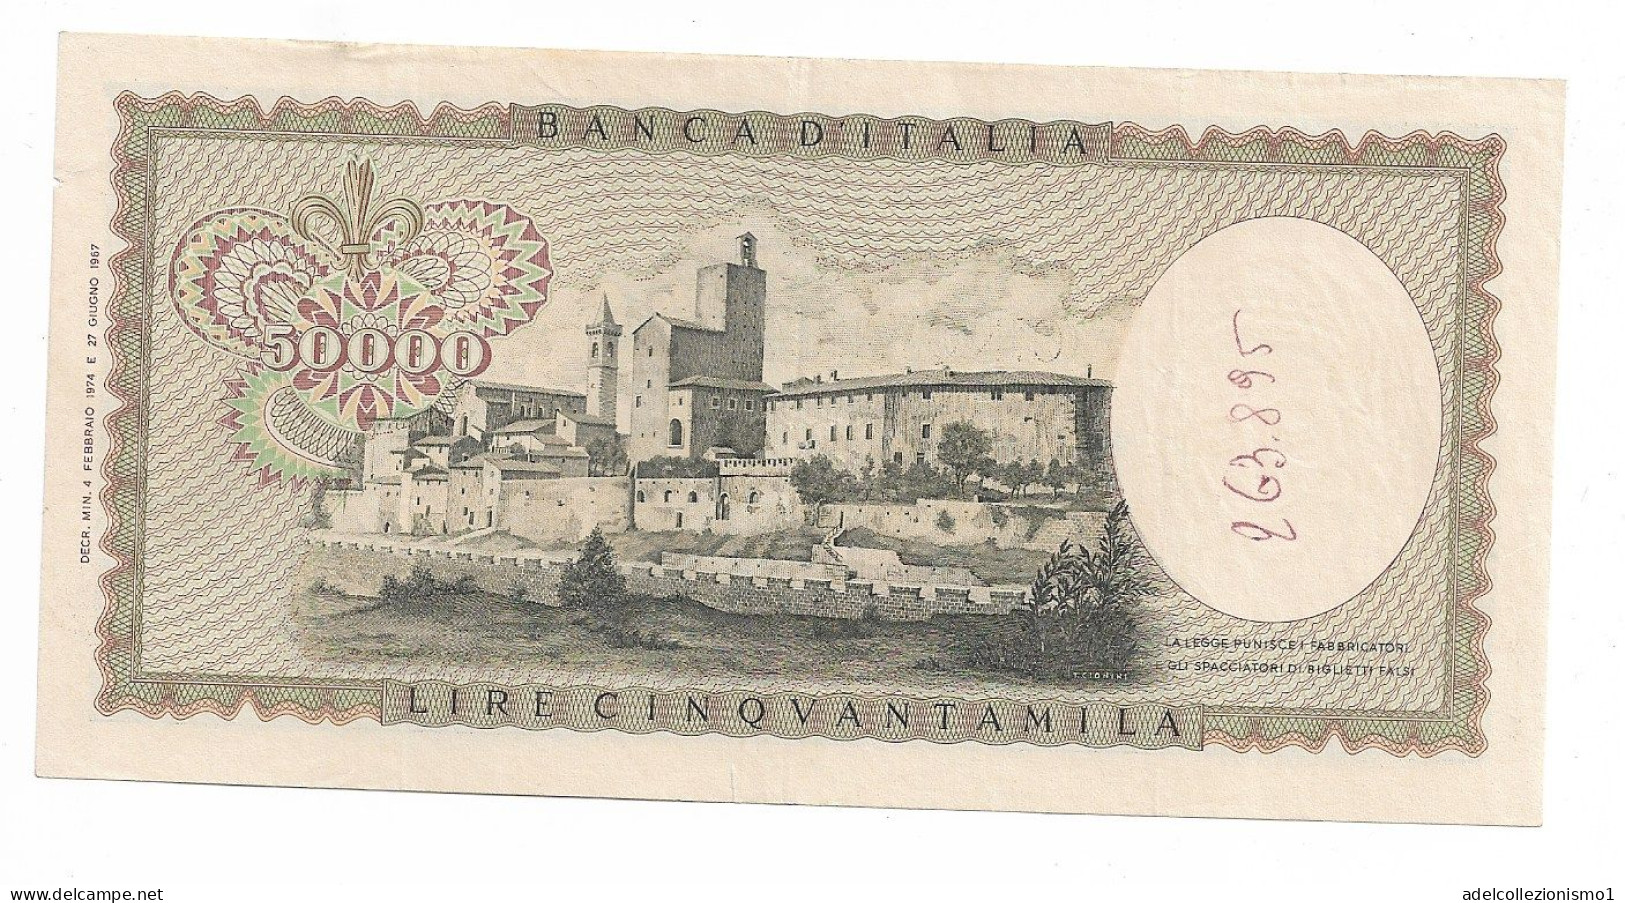 49487) BANCONOTA DA 50000 LIRE BANCA D'ITALIA LEONARDO DA VINCI 4/2/1974 - 50000 Lire